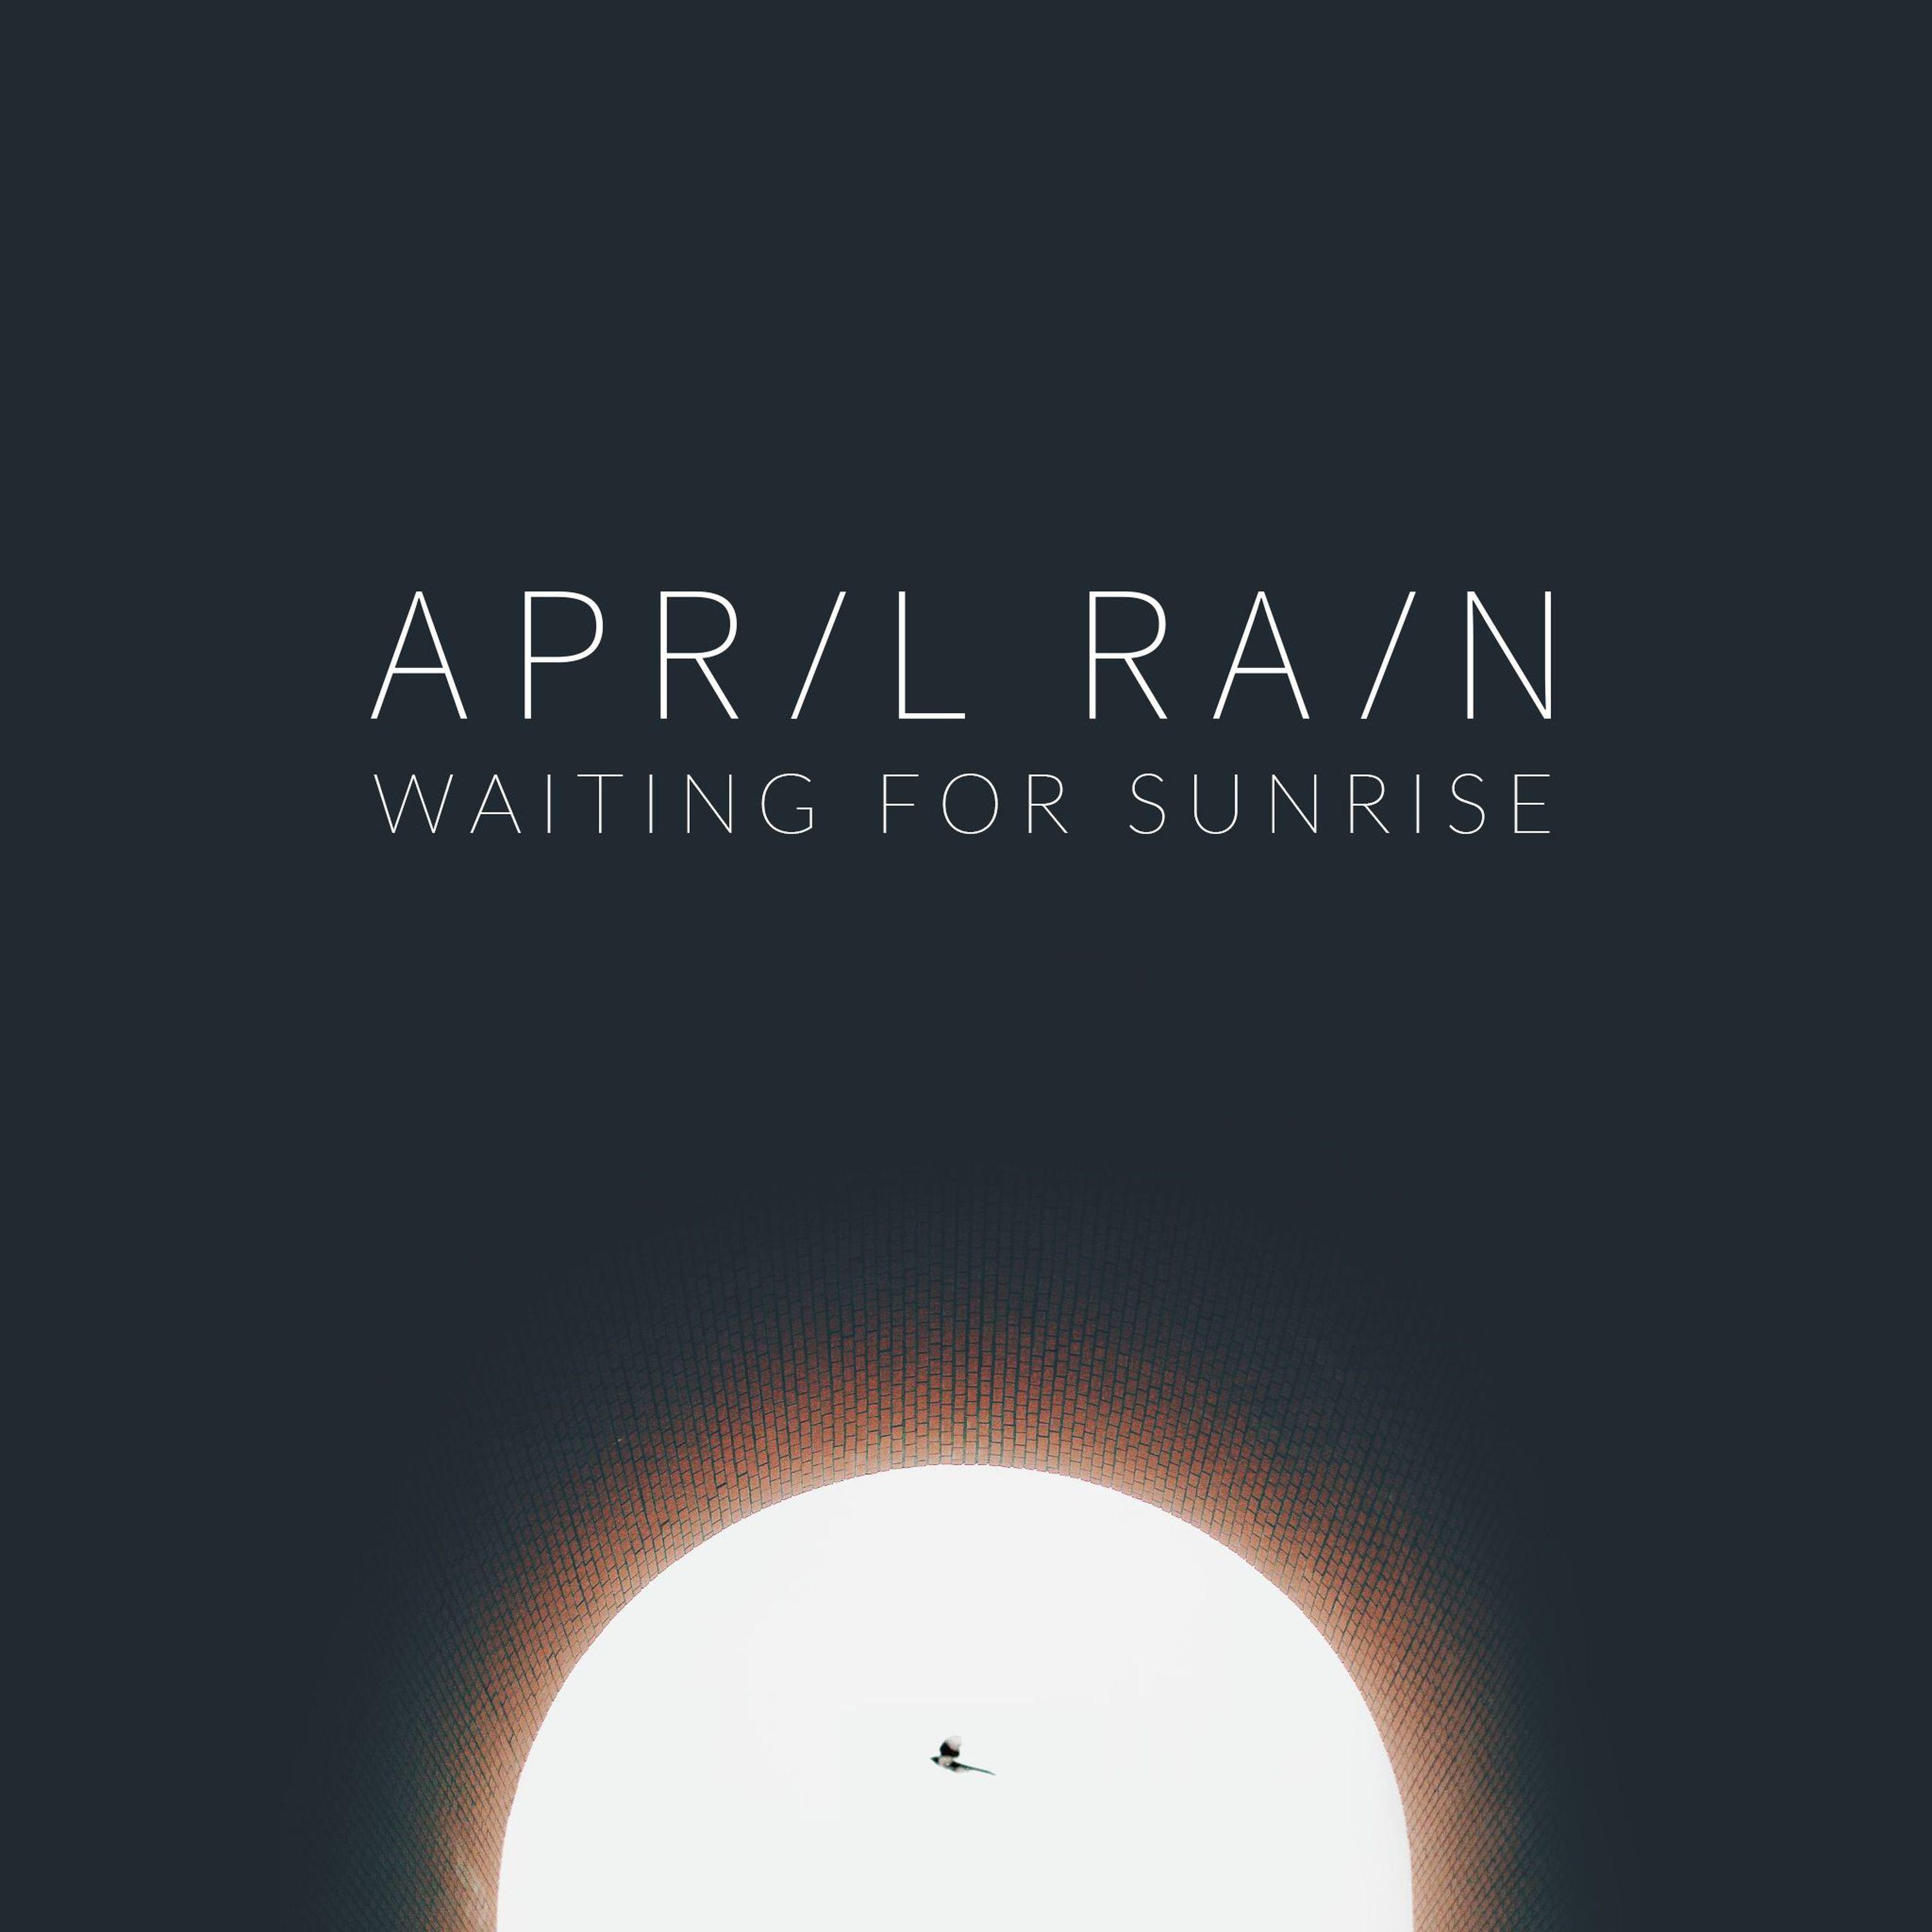 April rayne